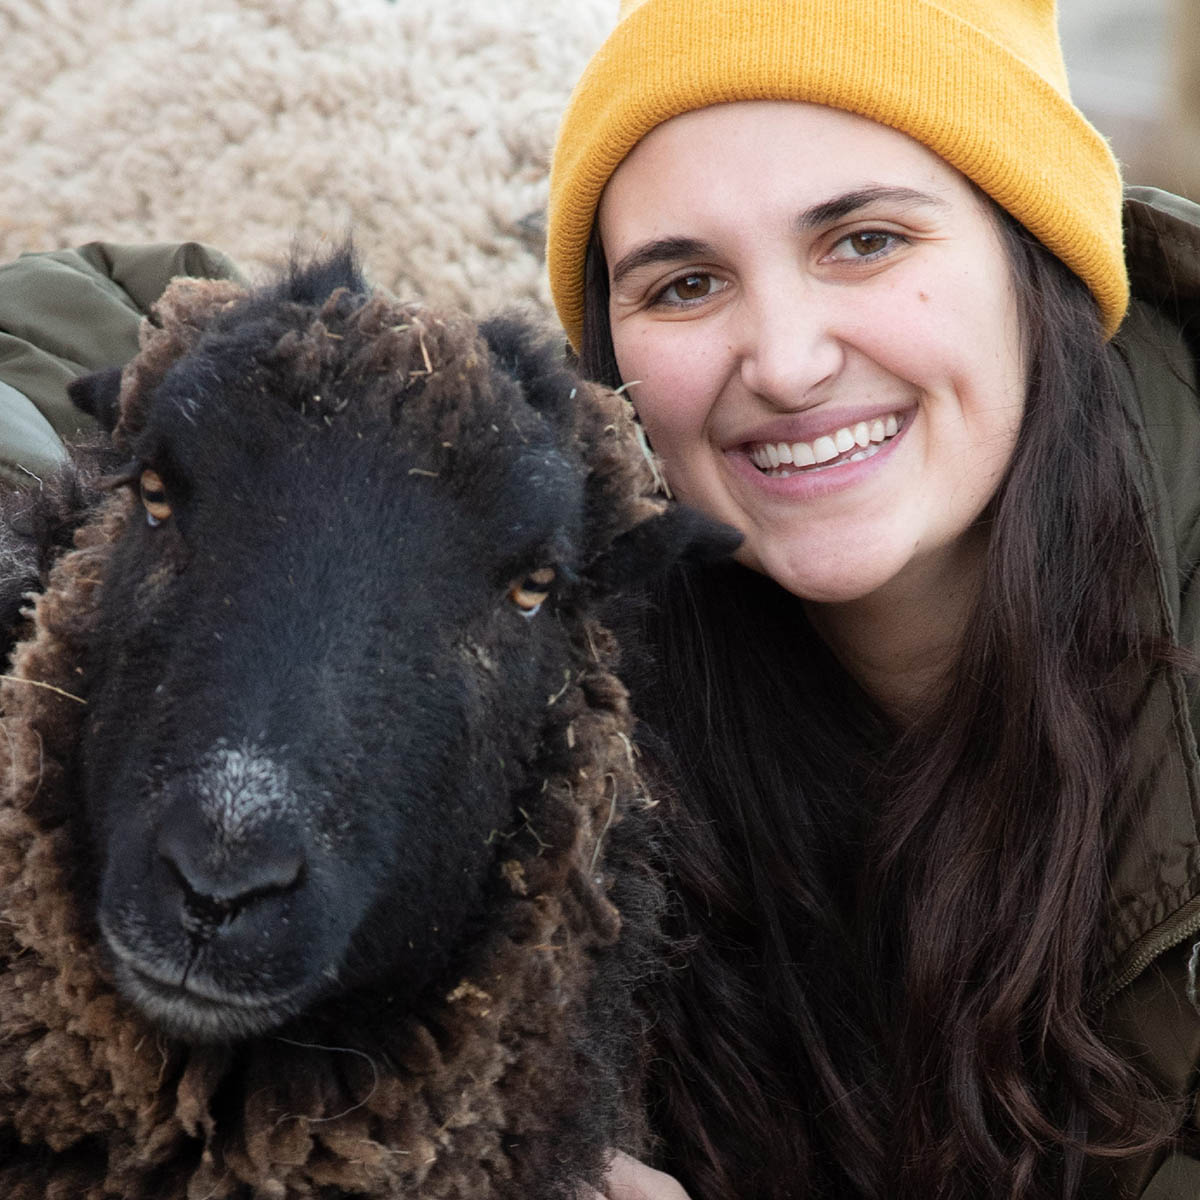 Woman smiling next to a black sheep